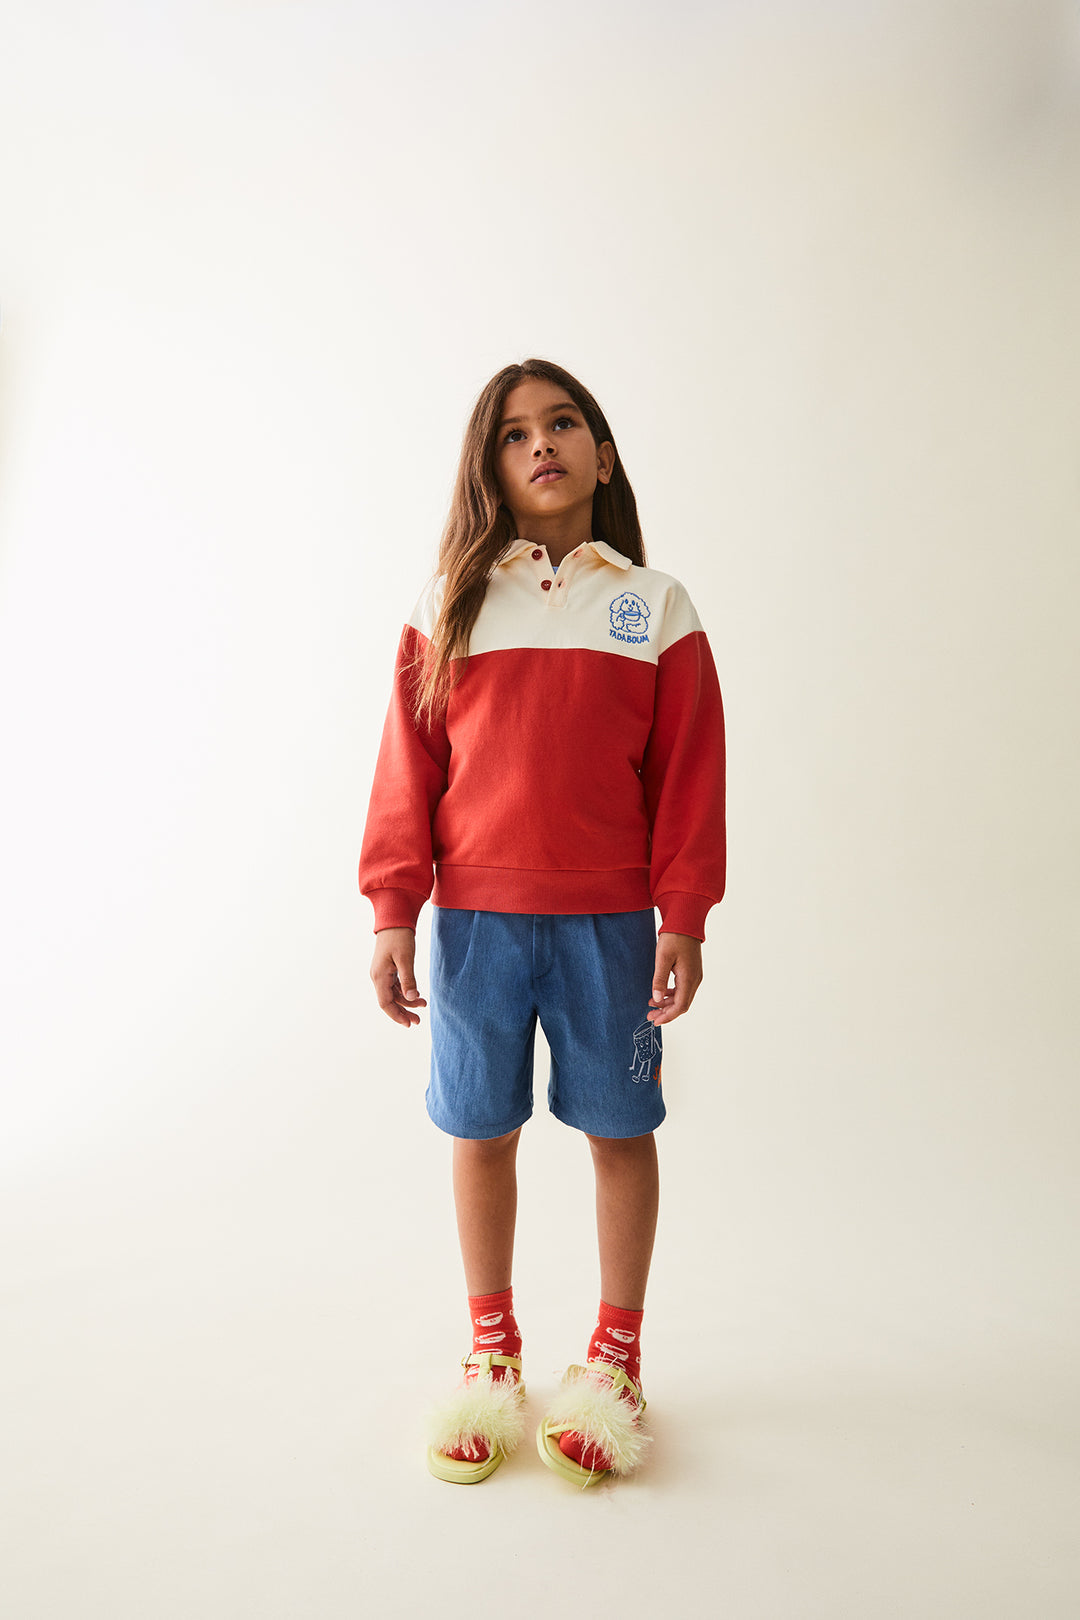 Triko e kuqe me te bardhe/Kendall sweatshirt-Maison Tadaboum